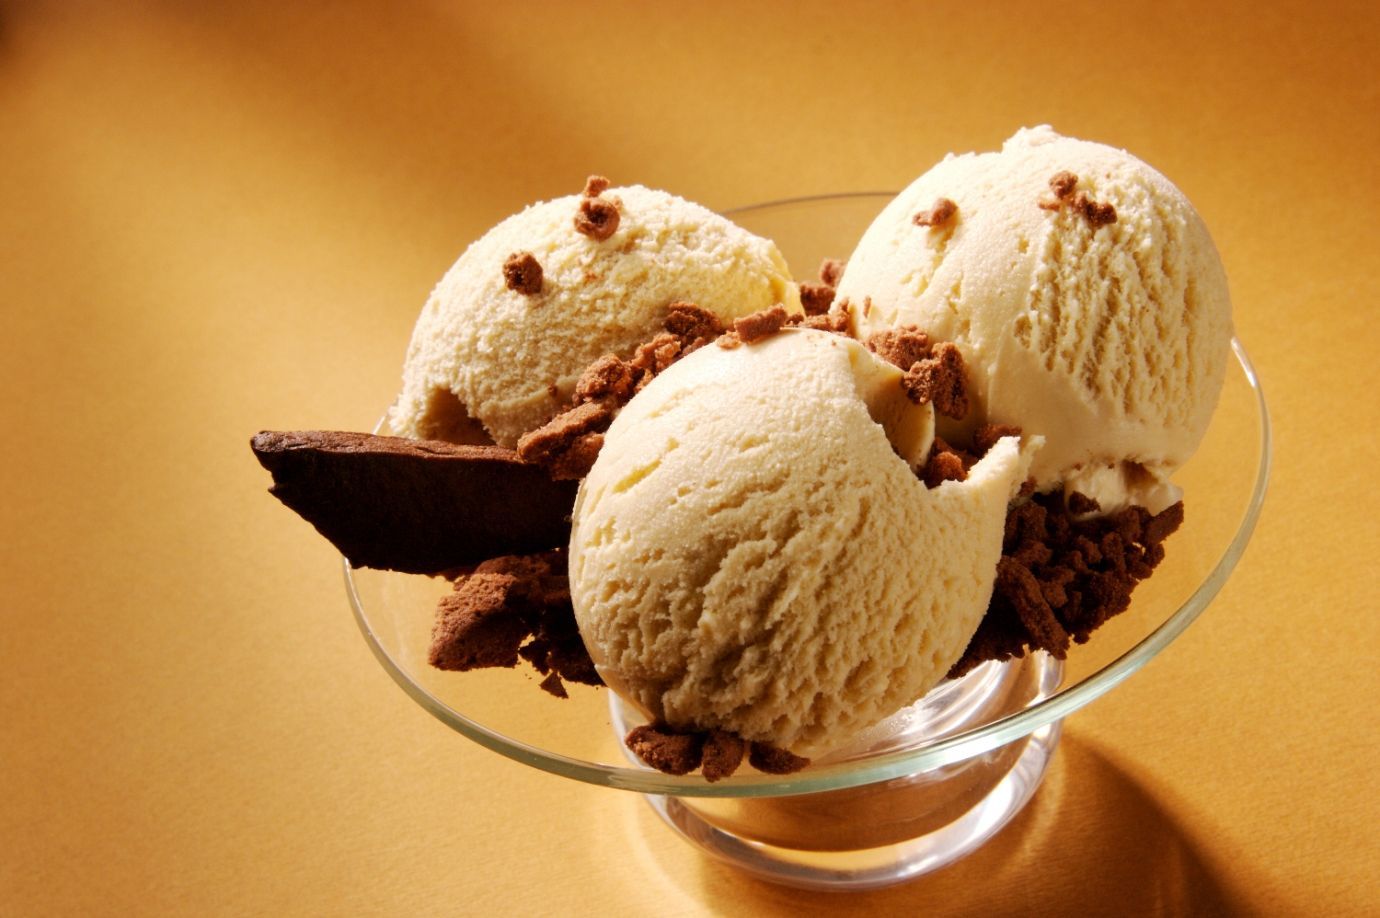 Chocolate Choco Chips Ice Cream HD Wallpaper. Ice cream wallpaper, Banana ice cream, Homemade chocolate ice cream